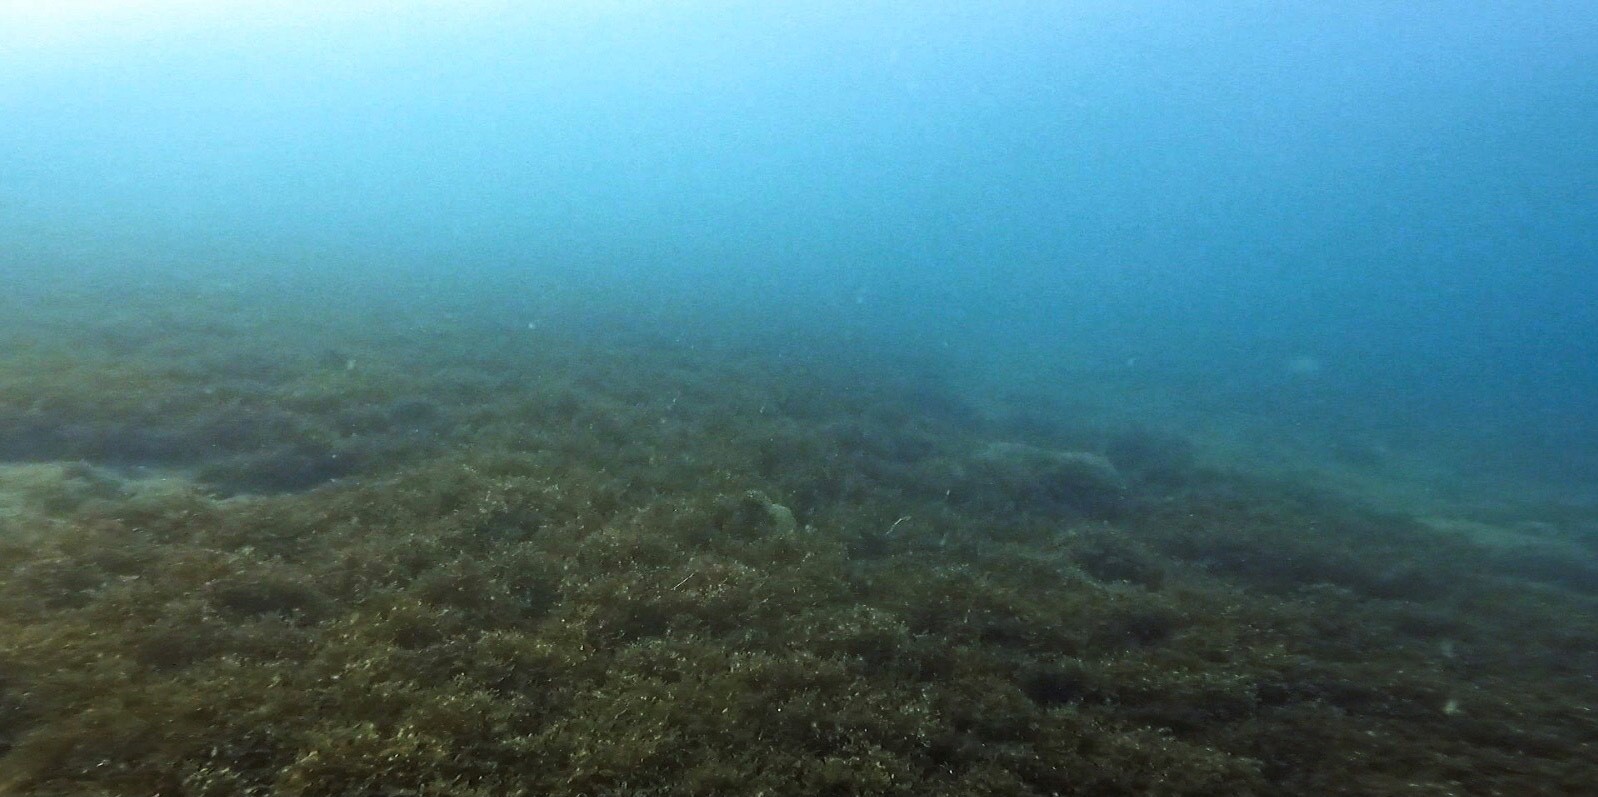 Image of deep water with brown seaweed